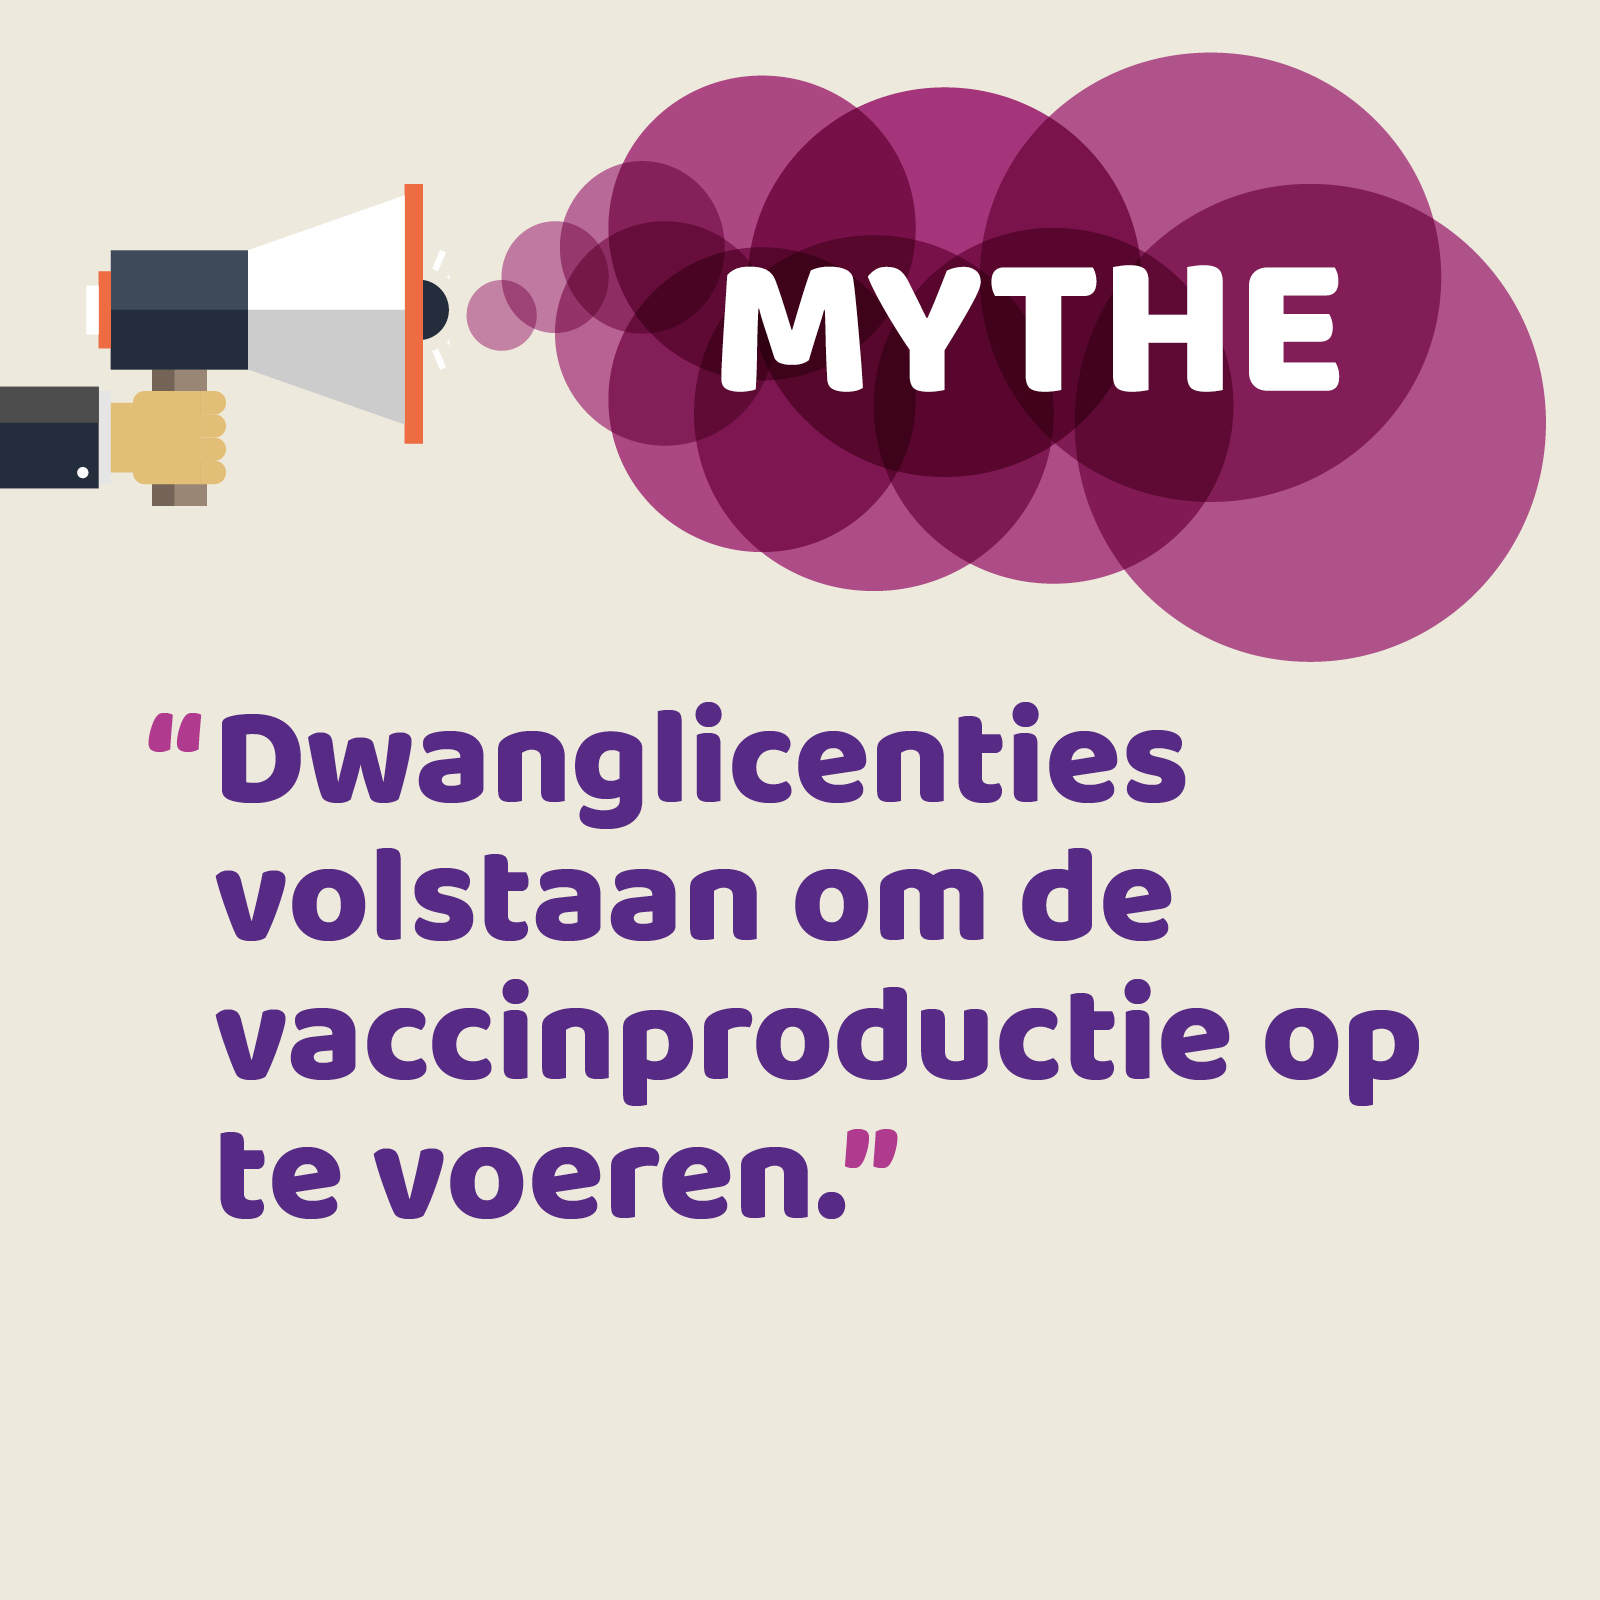 visual6_NL_mythe-dwanglicenties mythes